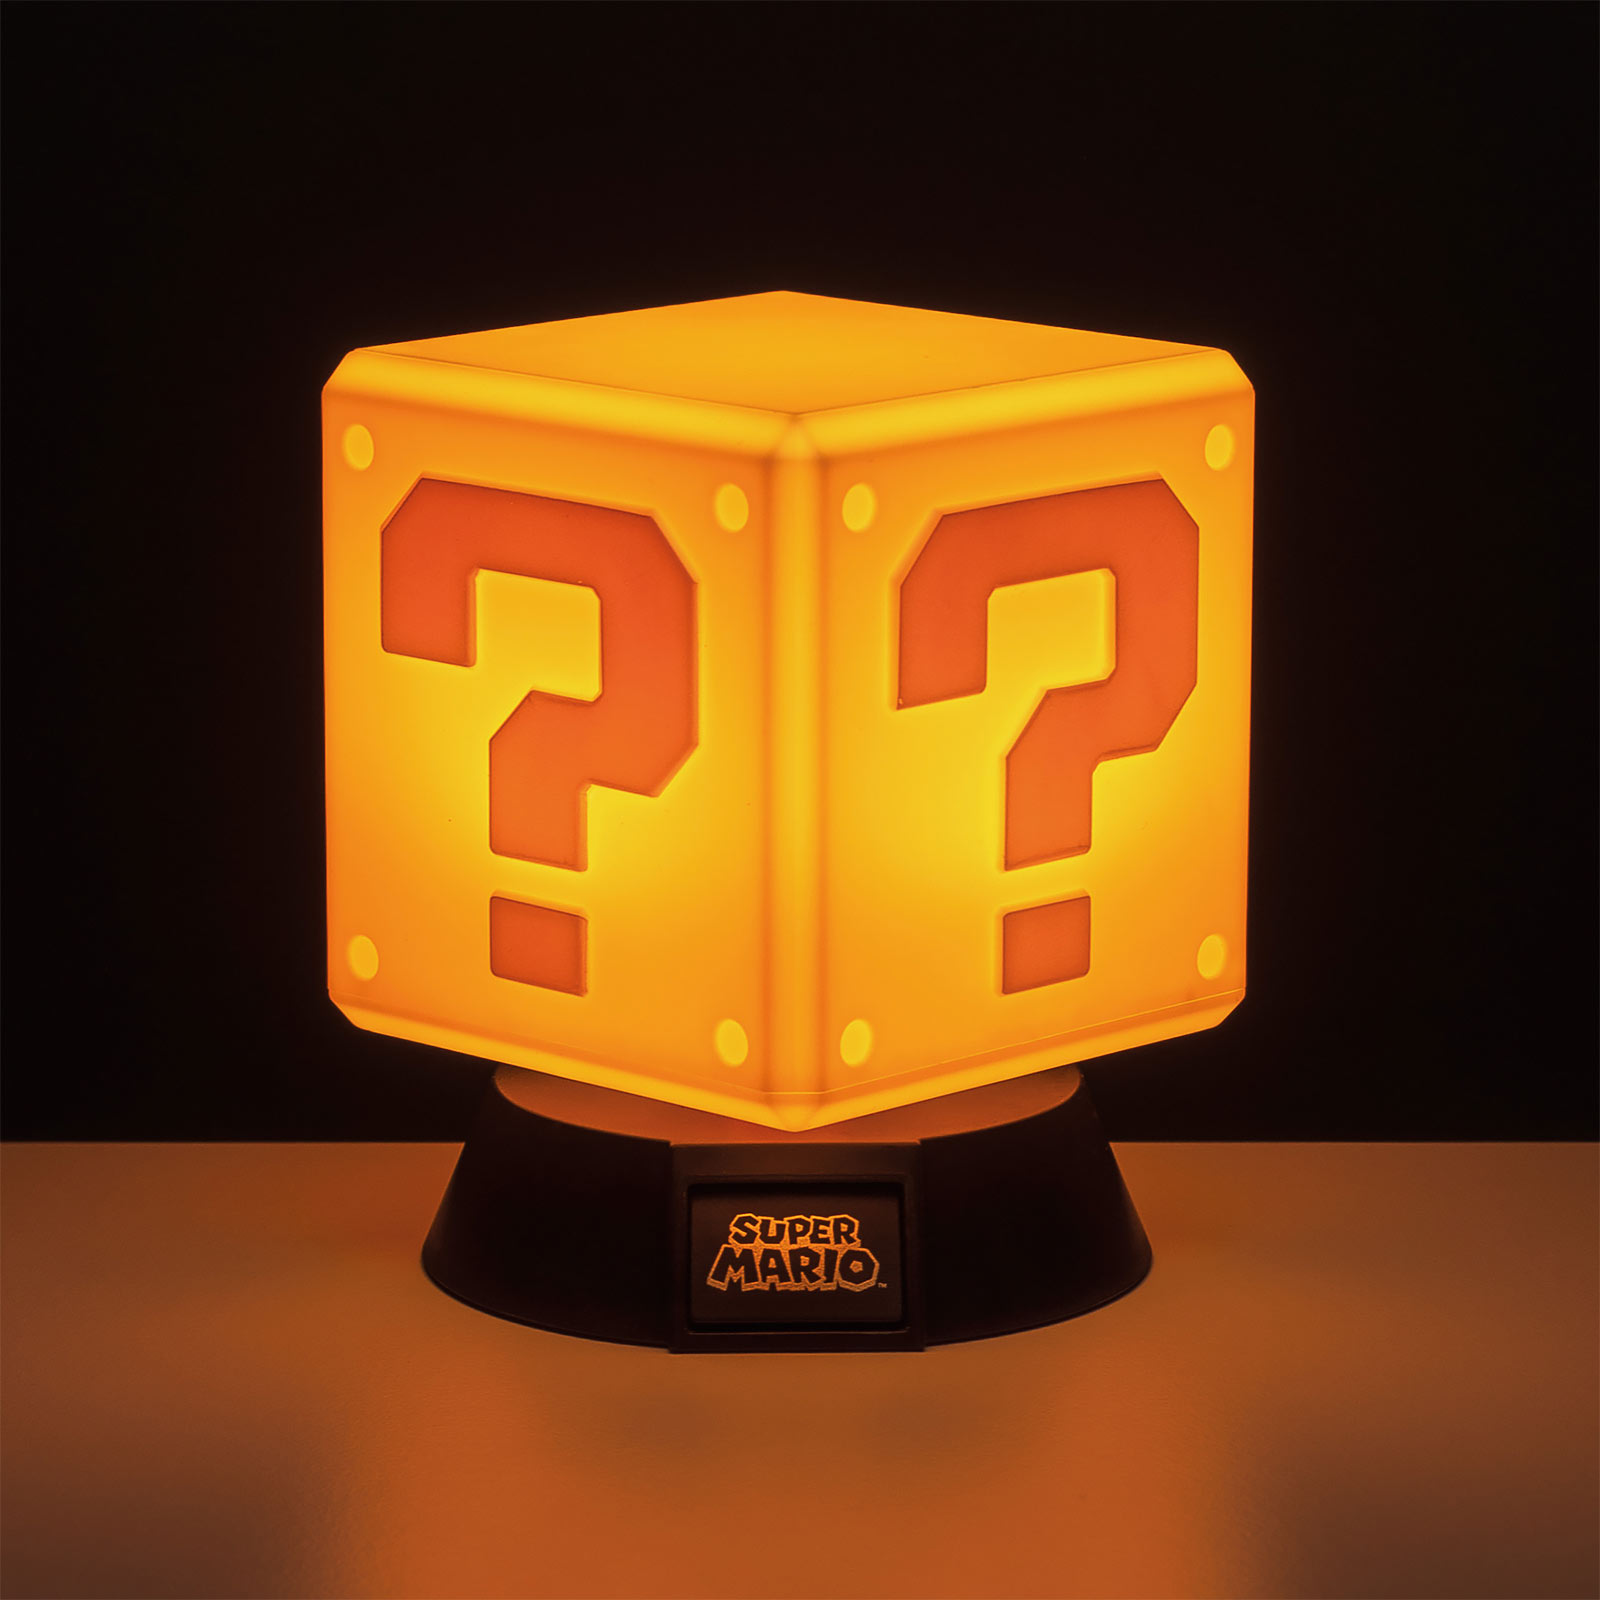 Super Mario - question mark block 3D table lamp